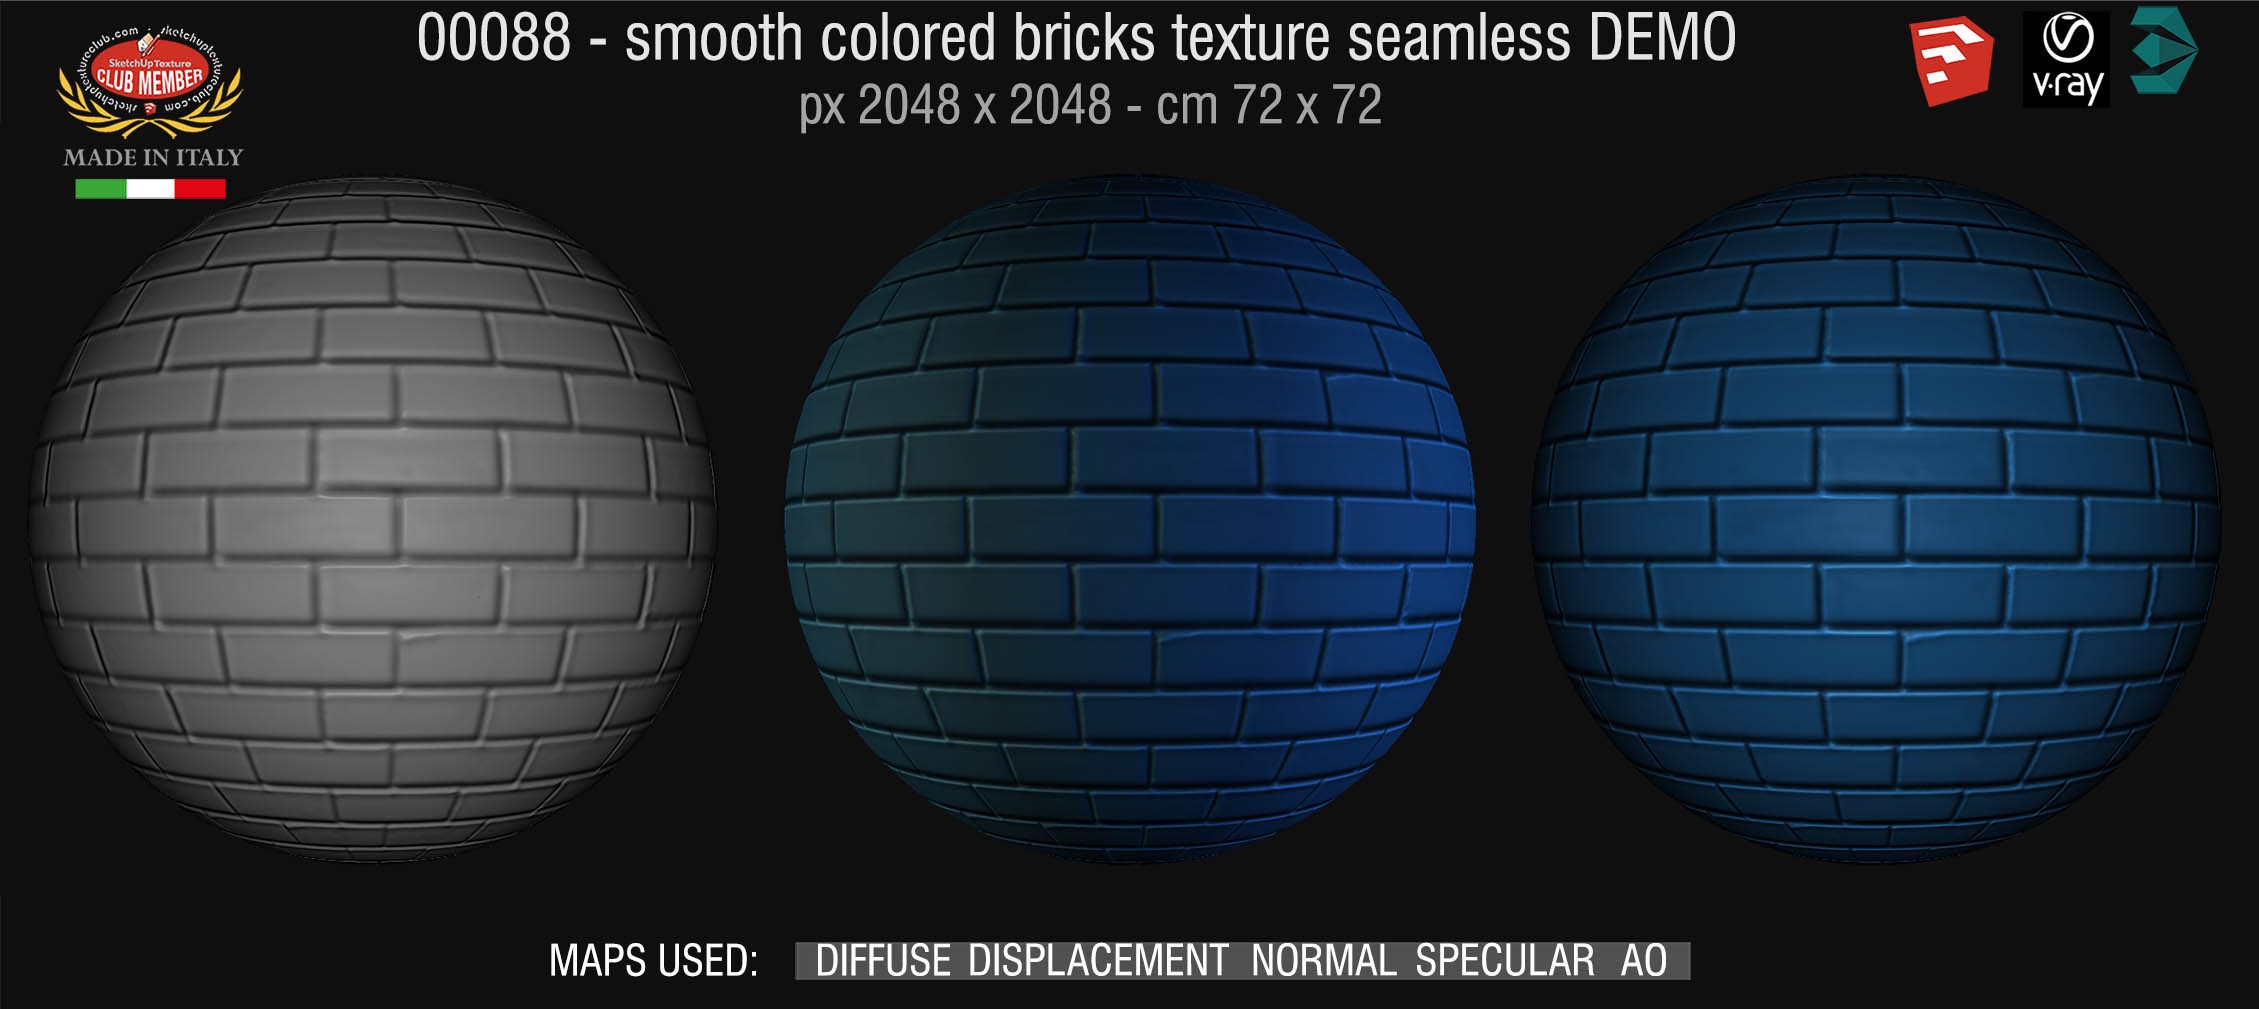 00088 smooth colored bricks texture seamless + maps DEMO